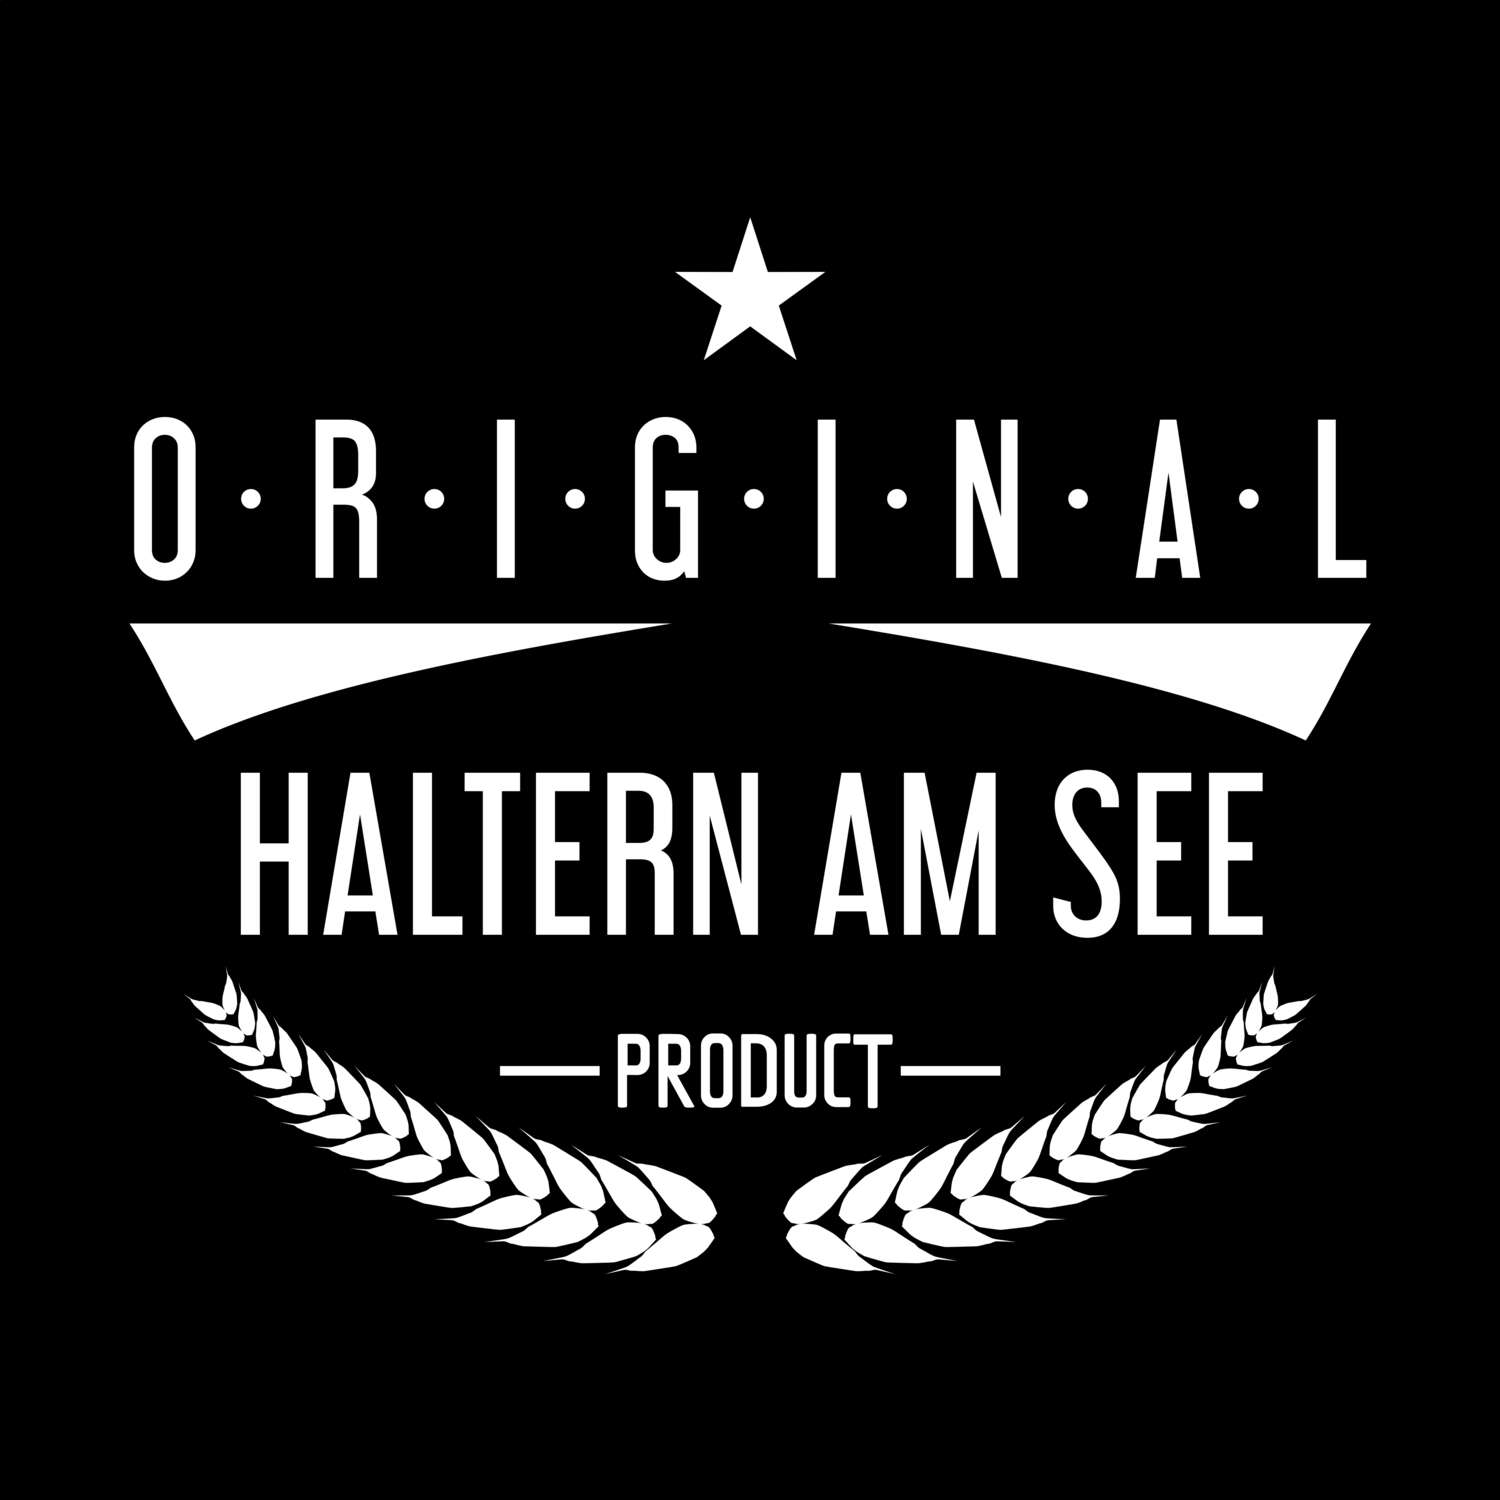 Haltern am See T-Shirt »Original Product«